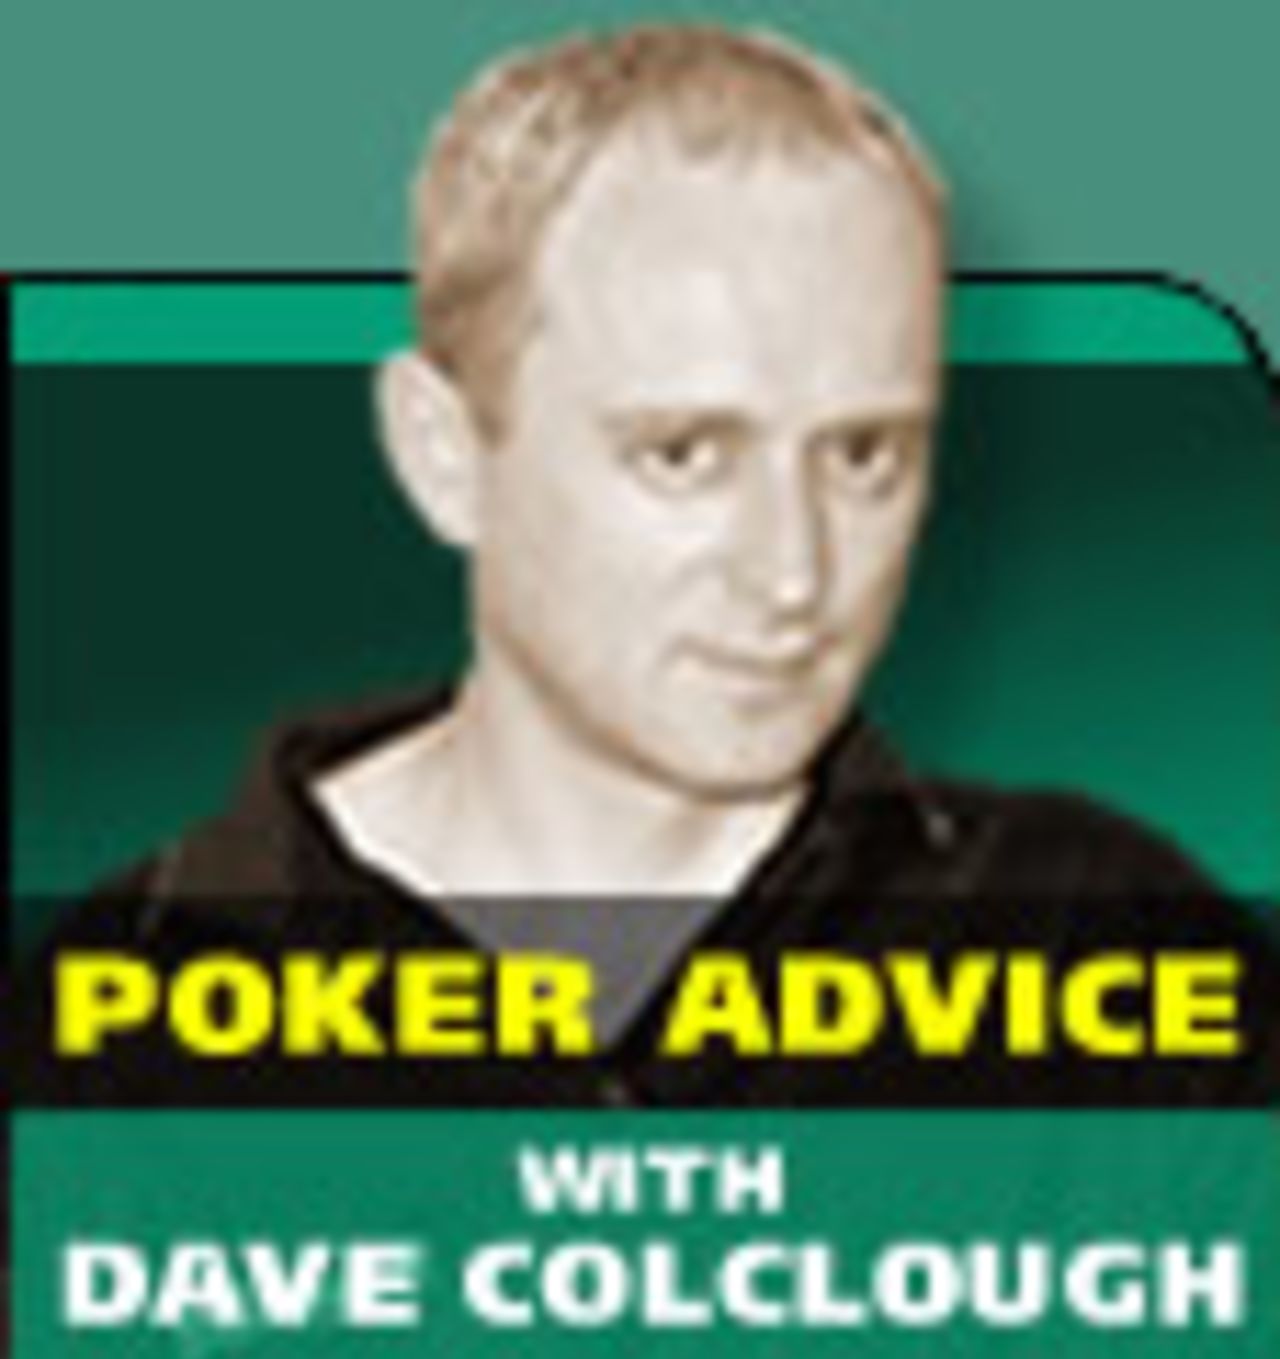 bet365poker advice column logo